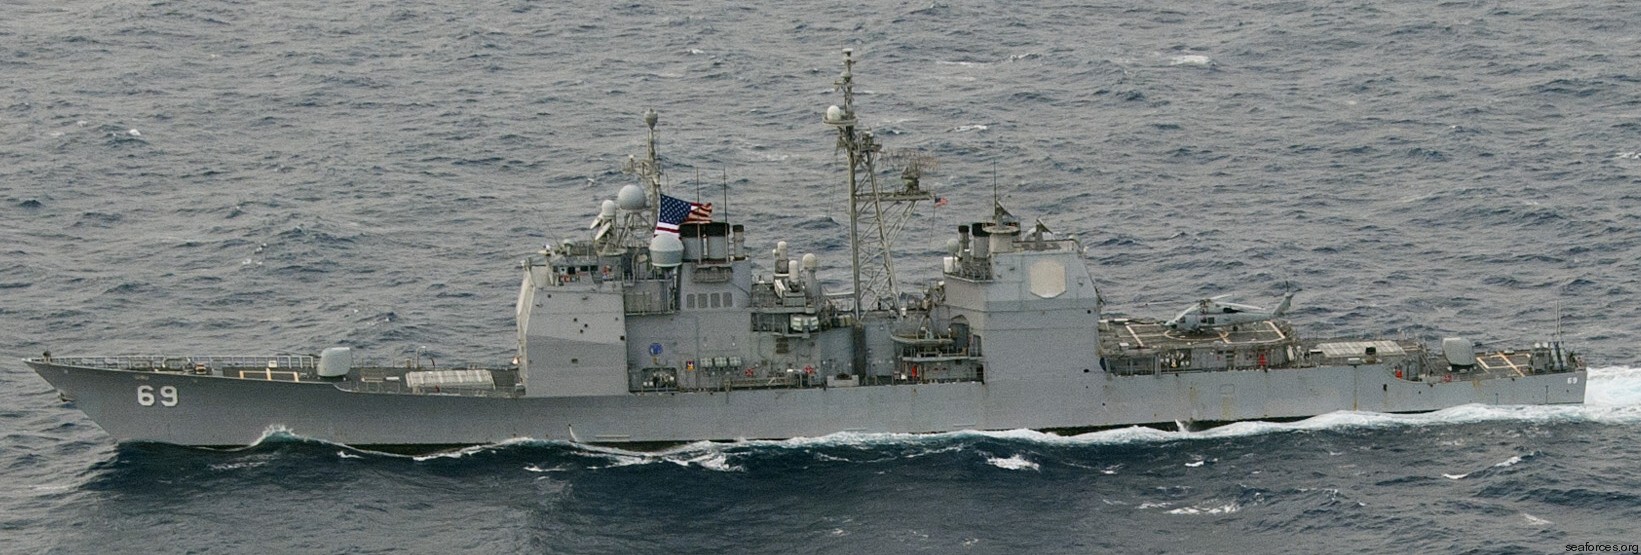 cg-69 uss vicksburg ticonderoga class guided missile cruiser us navy 18